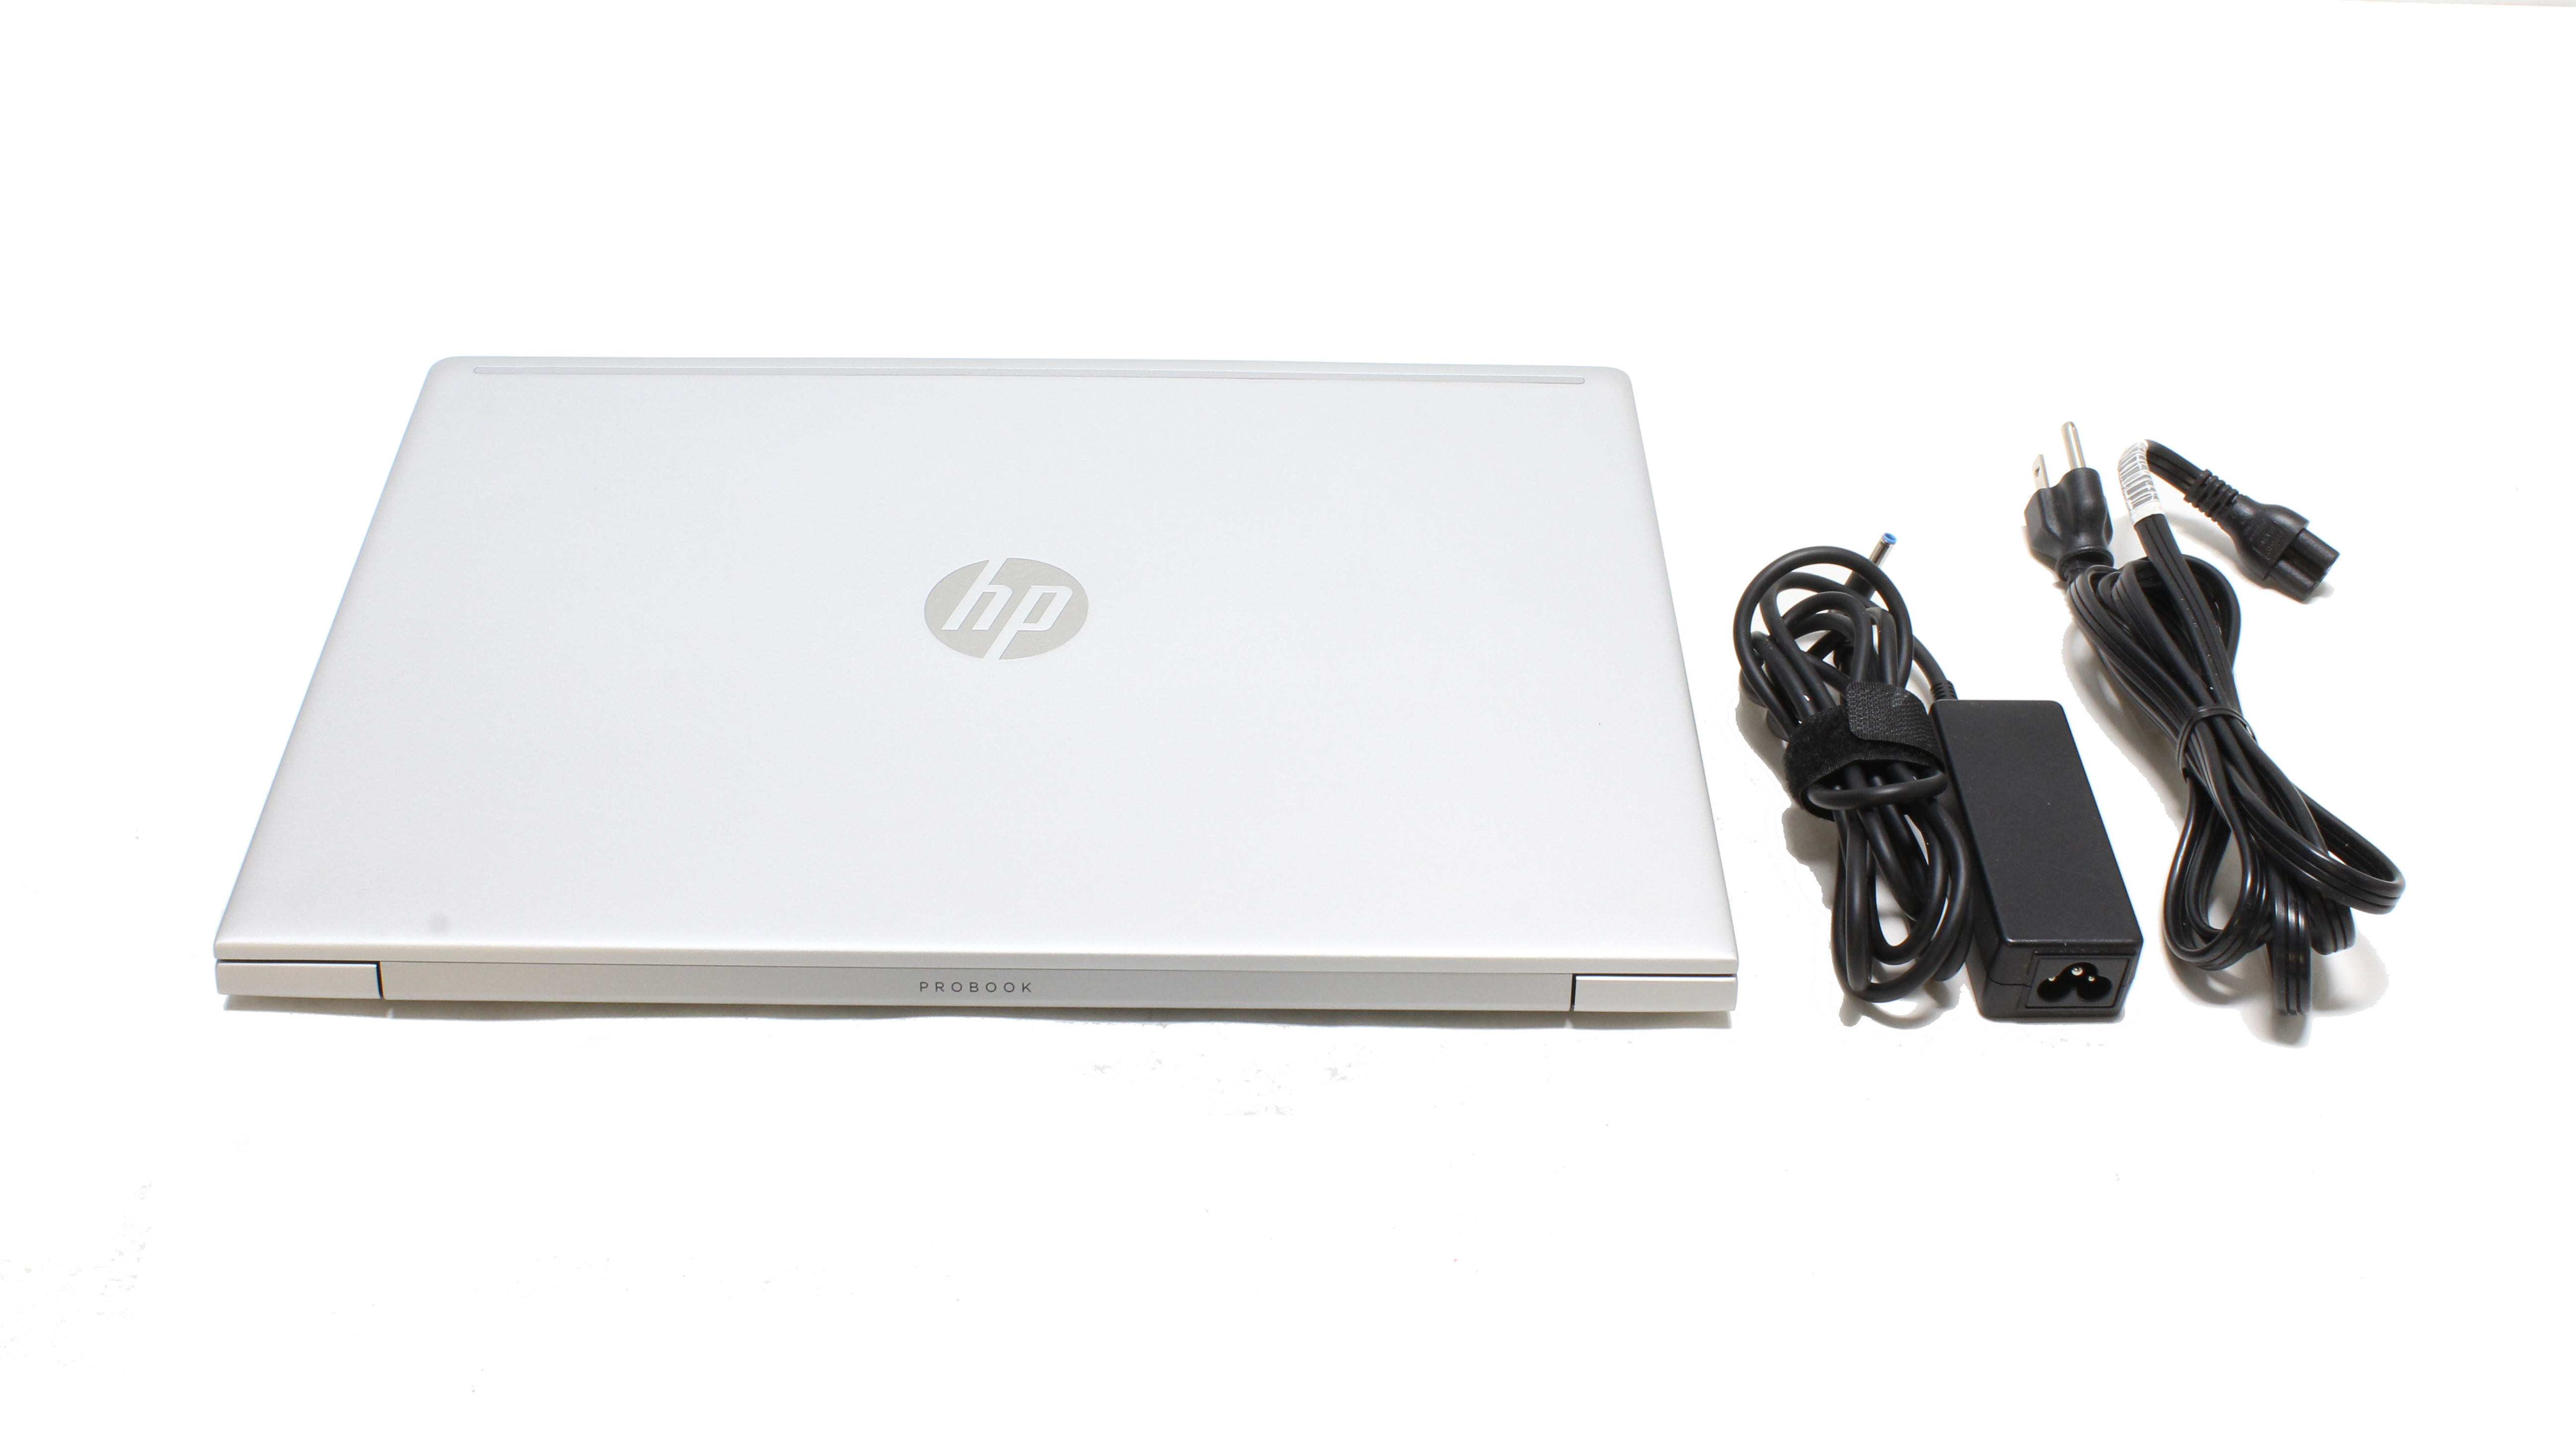 HP ProBook 455R G6 15.6" Full HD AMD Ryzen 3 3200U 2.6GHz SSD 128GB RAM 4GB Win10 7MS82UT#ABA - Click Image to Close